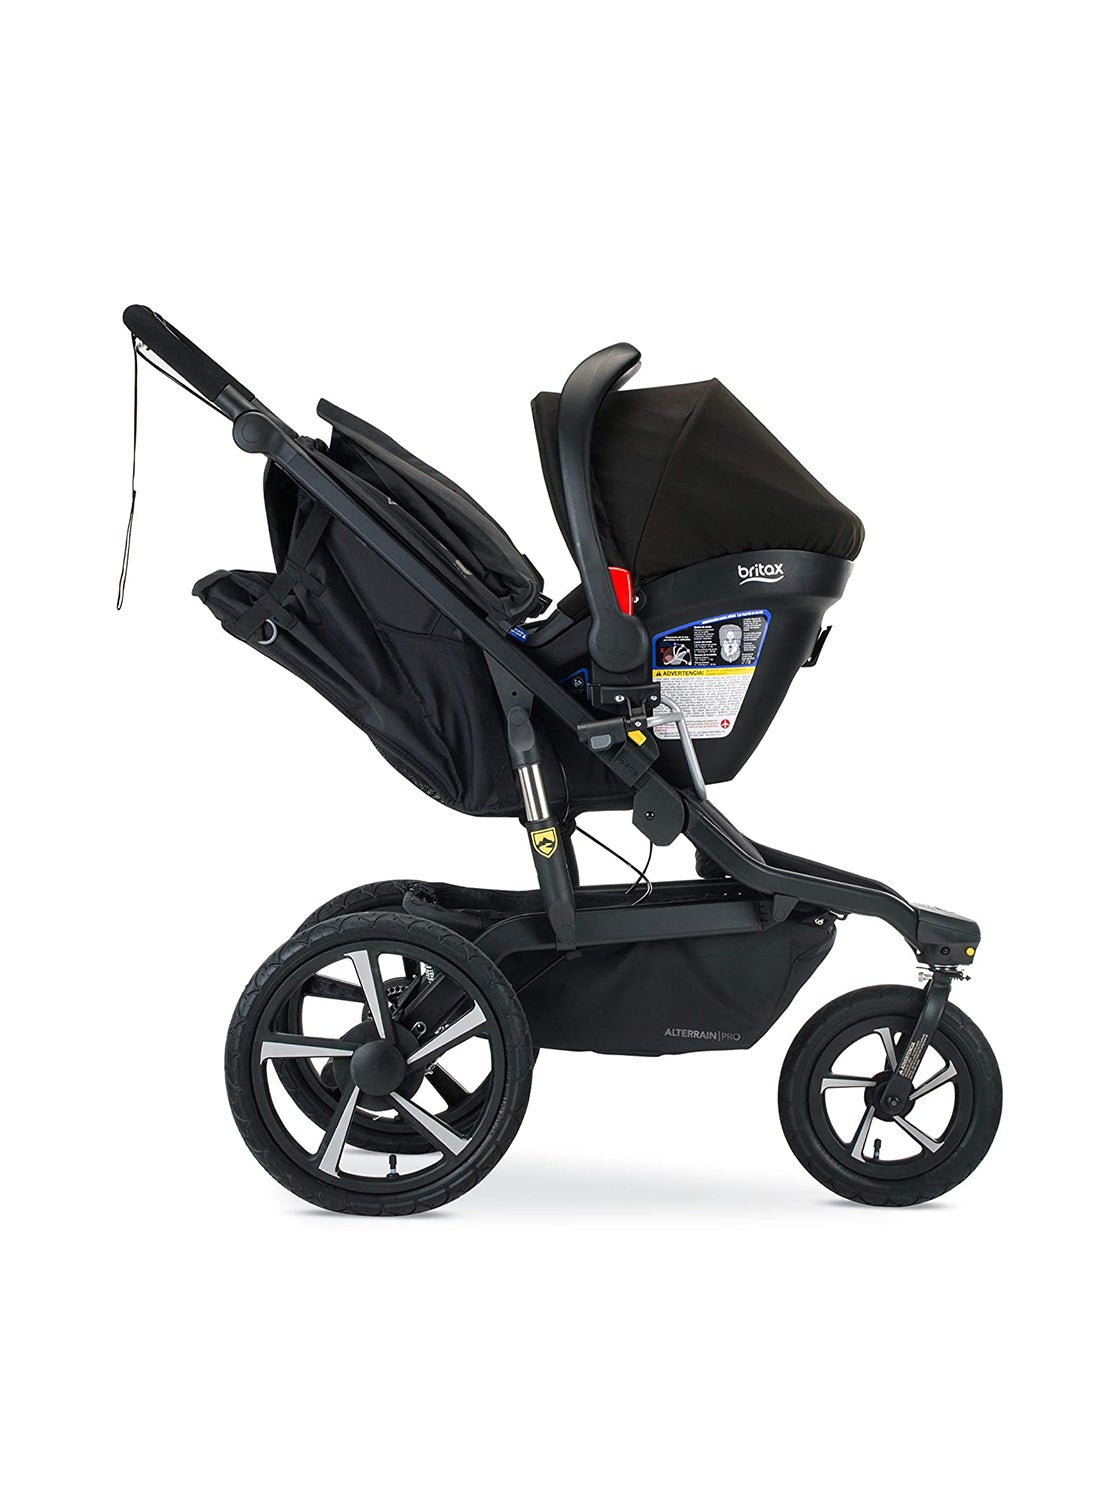 BOB Gear Single Jogging Stroller Adapter for Britax Infant Car Seats - ANB Baby -$50 - $75